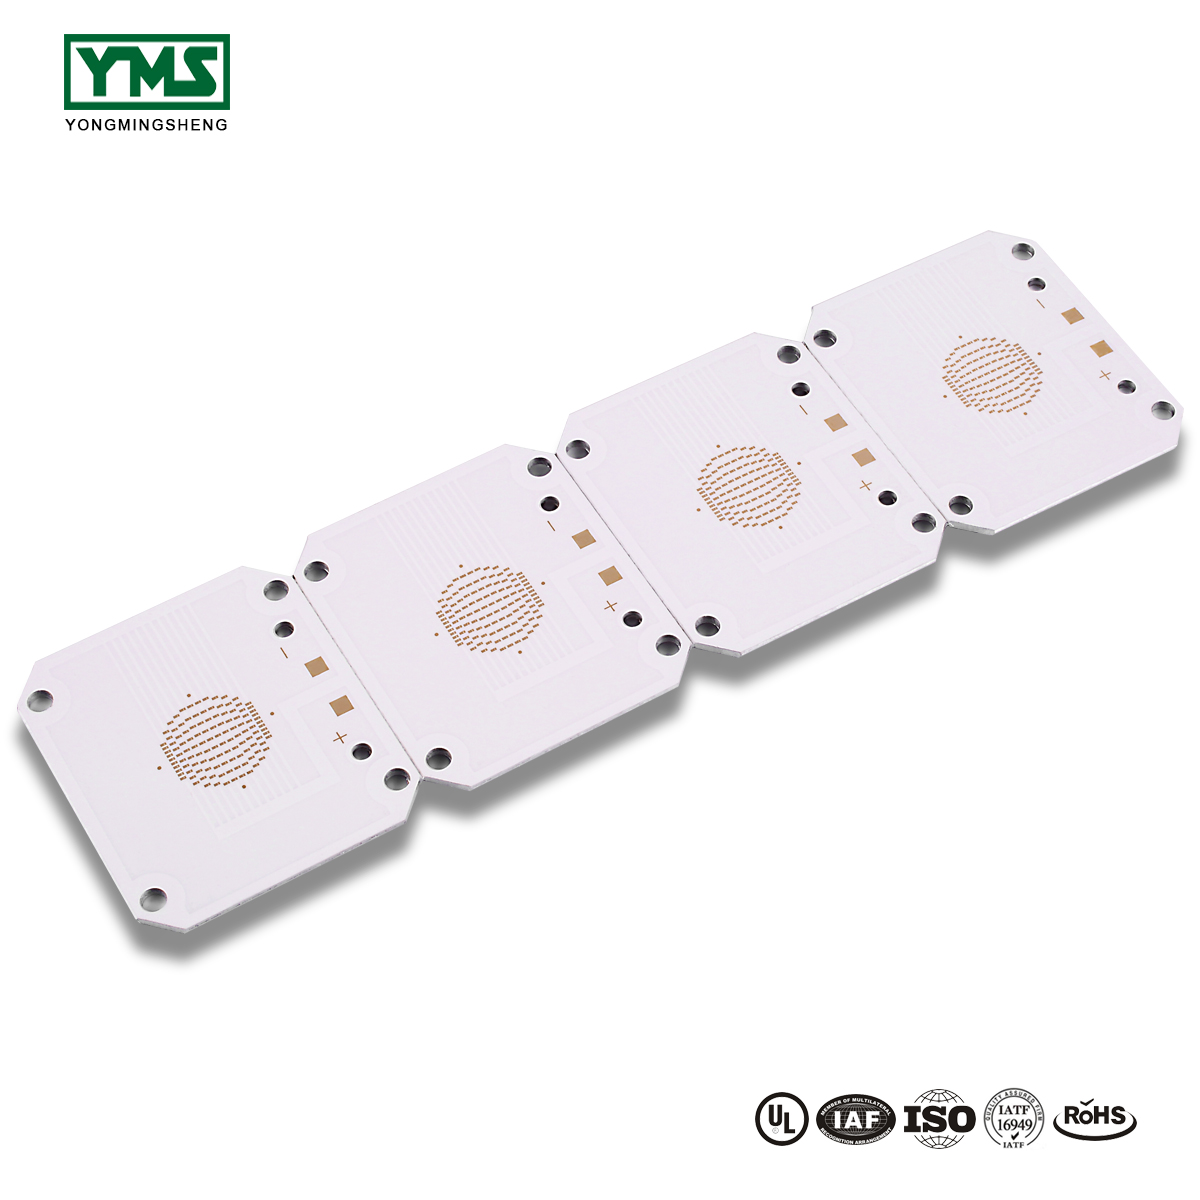 factory customized Wonderful Rigid-Flex Pcb - 1Layer Aluminum base Board | YMSPCB – Yongmingsheng